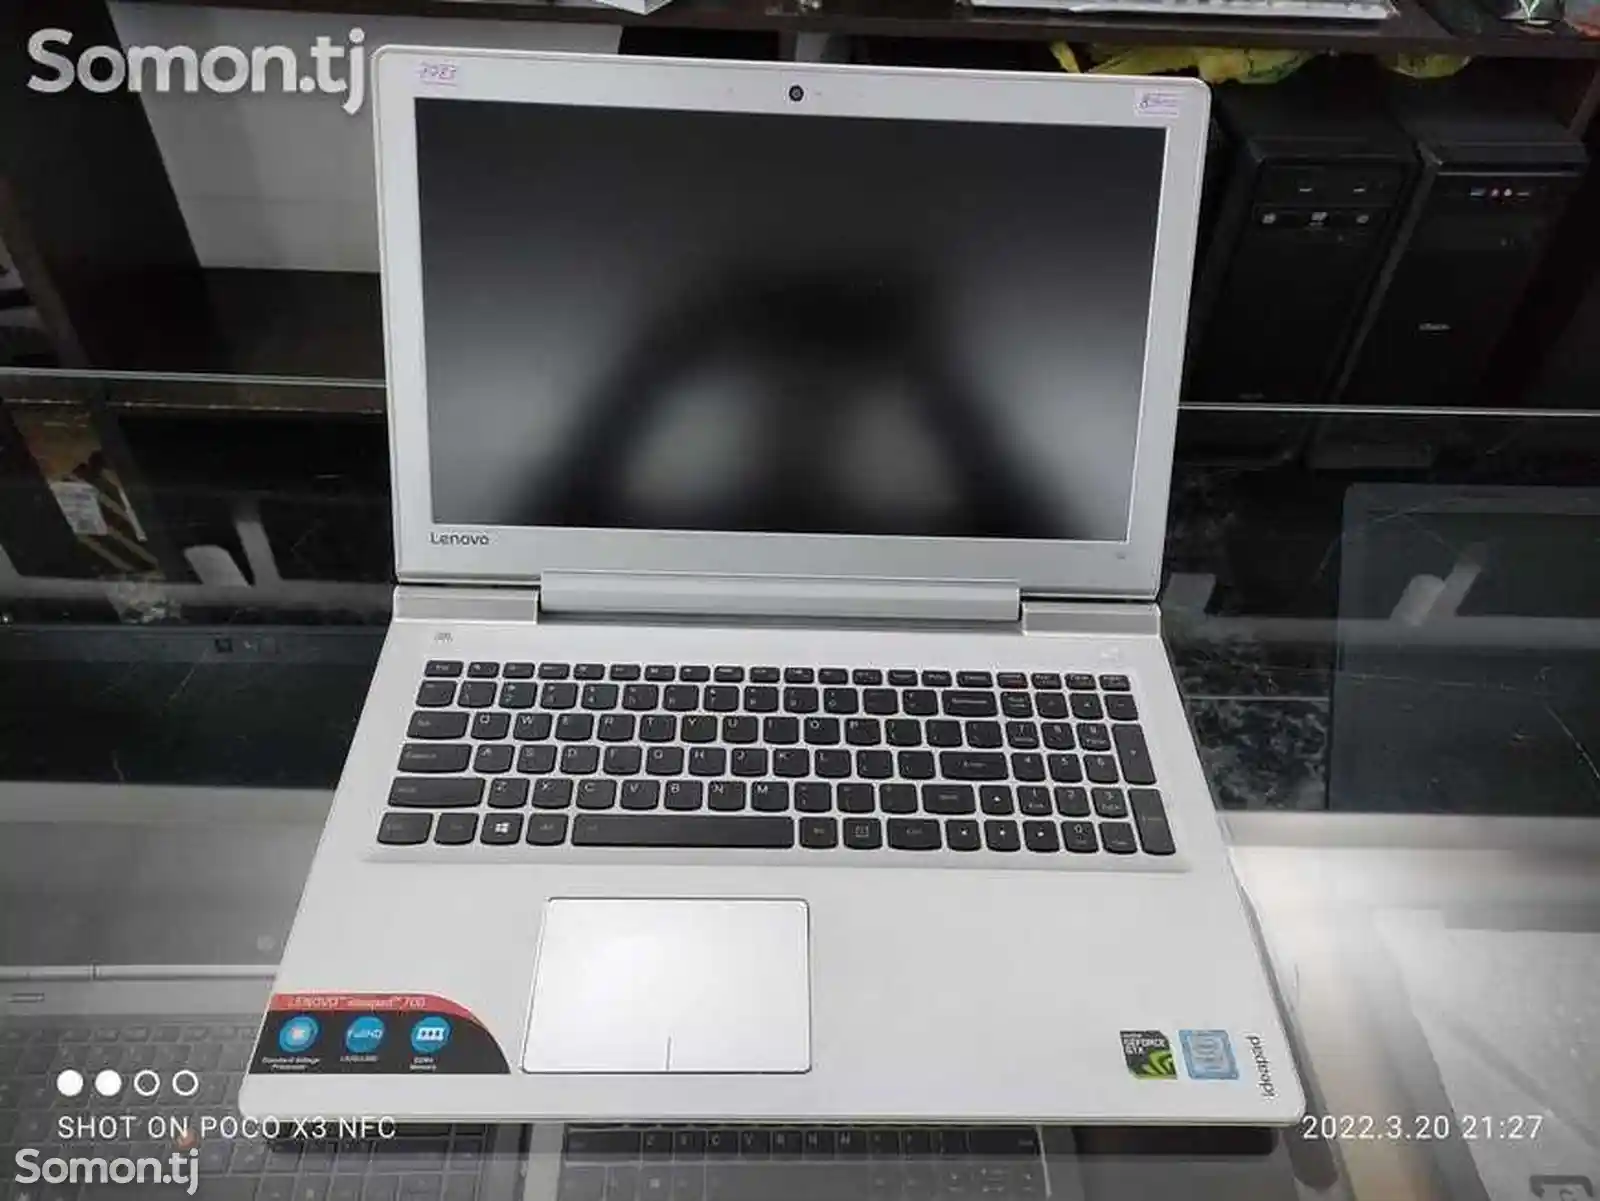 Игровой Ноутбук Lenovo Ideapad 700 Core i7-6700HQ GTX 950M 2Gb-2